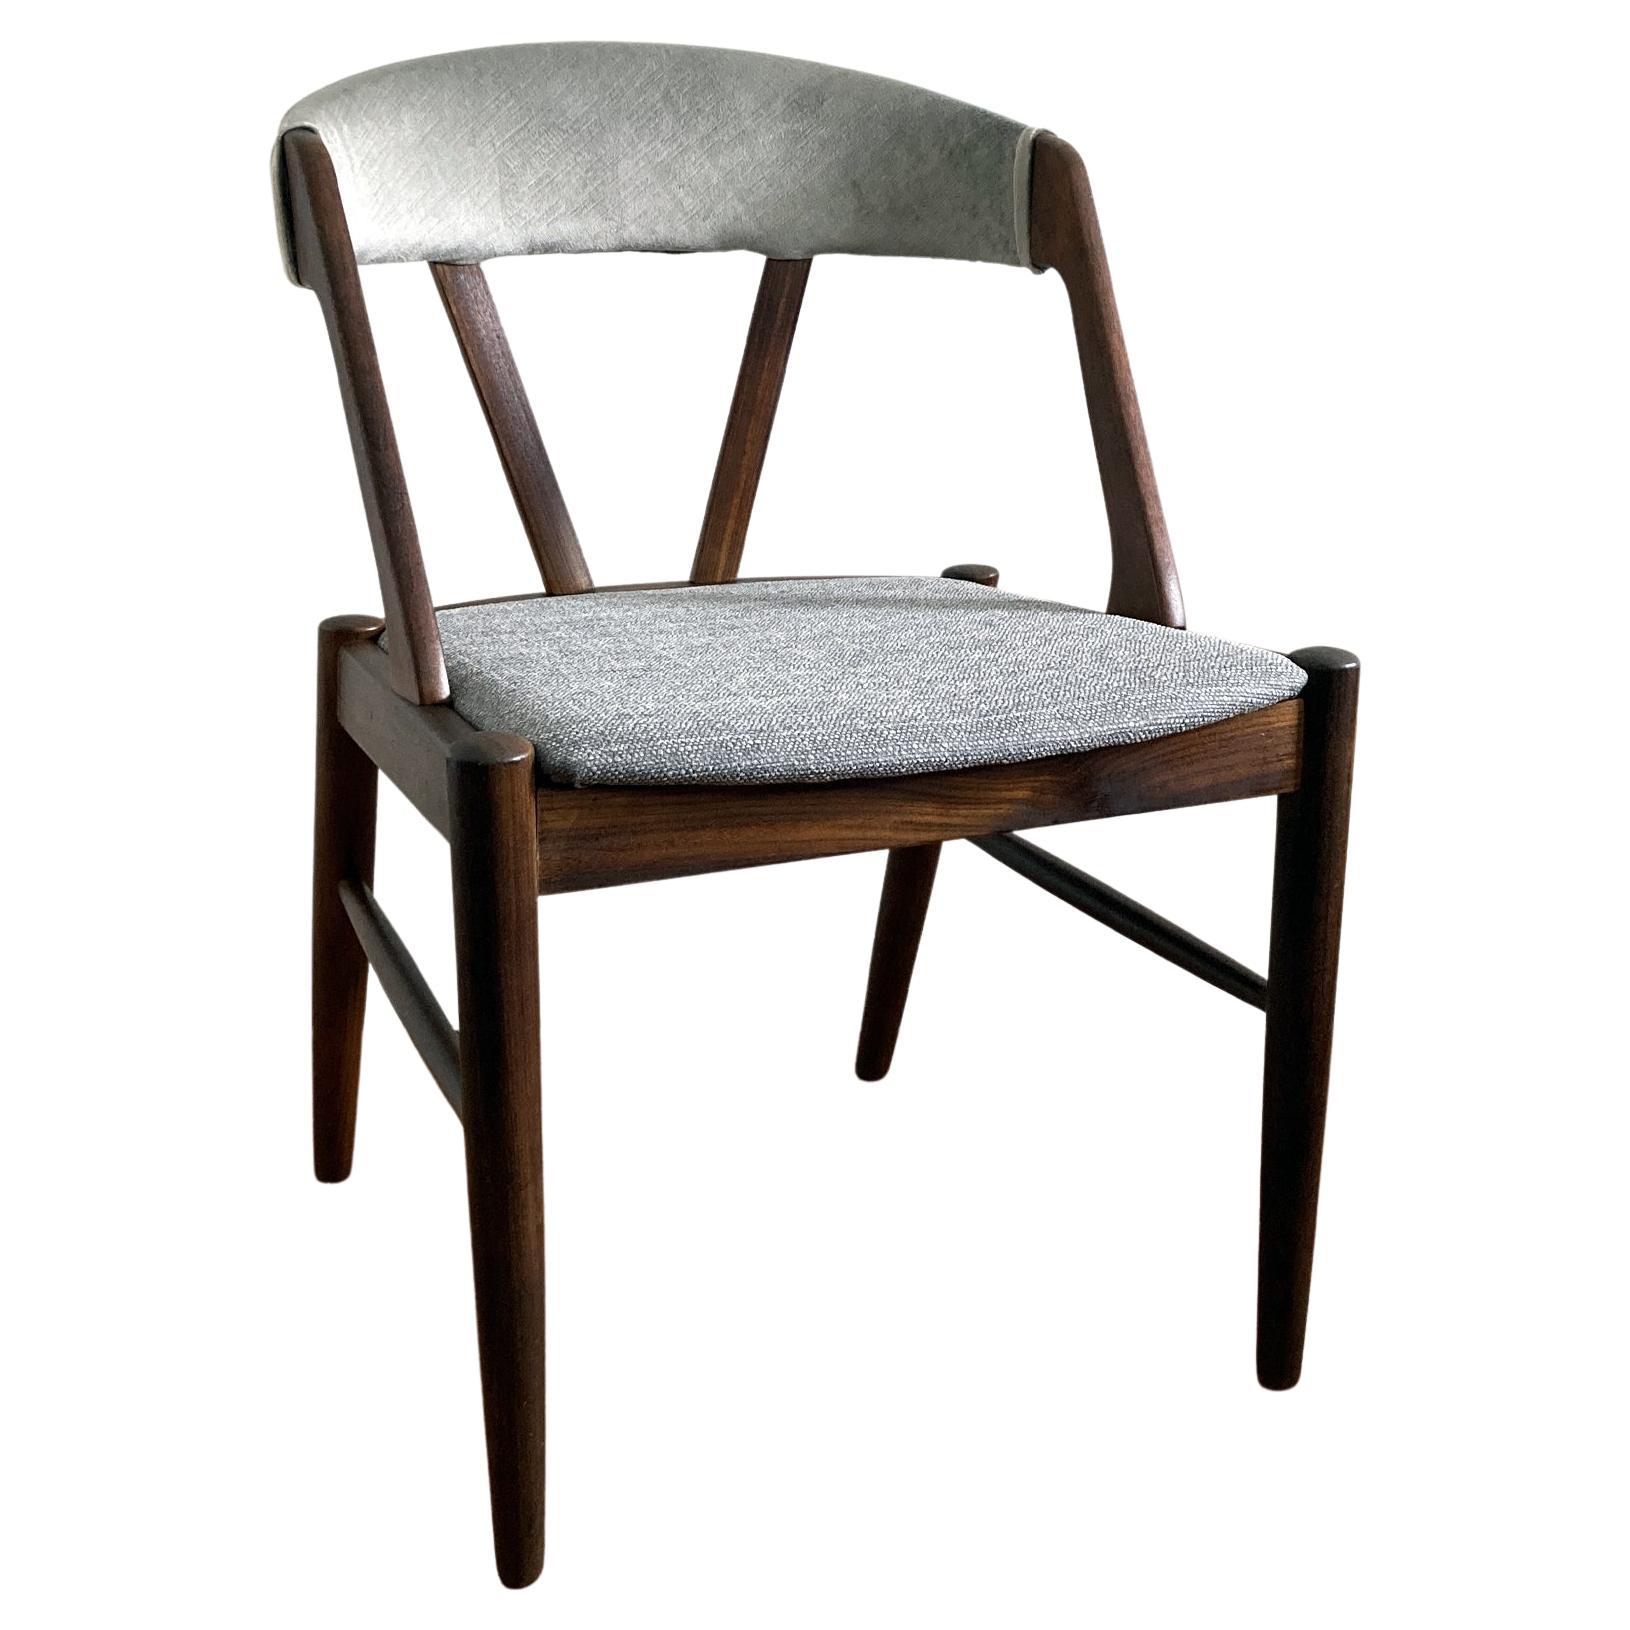 Kai Kristiansen Style Reupholstered Curved Back Gray Teak Chair, Danish, 1960s